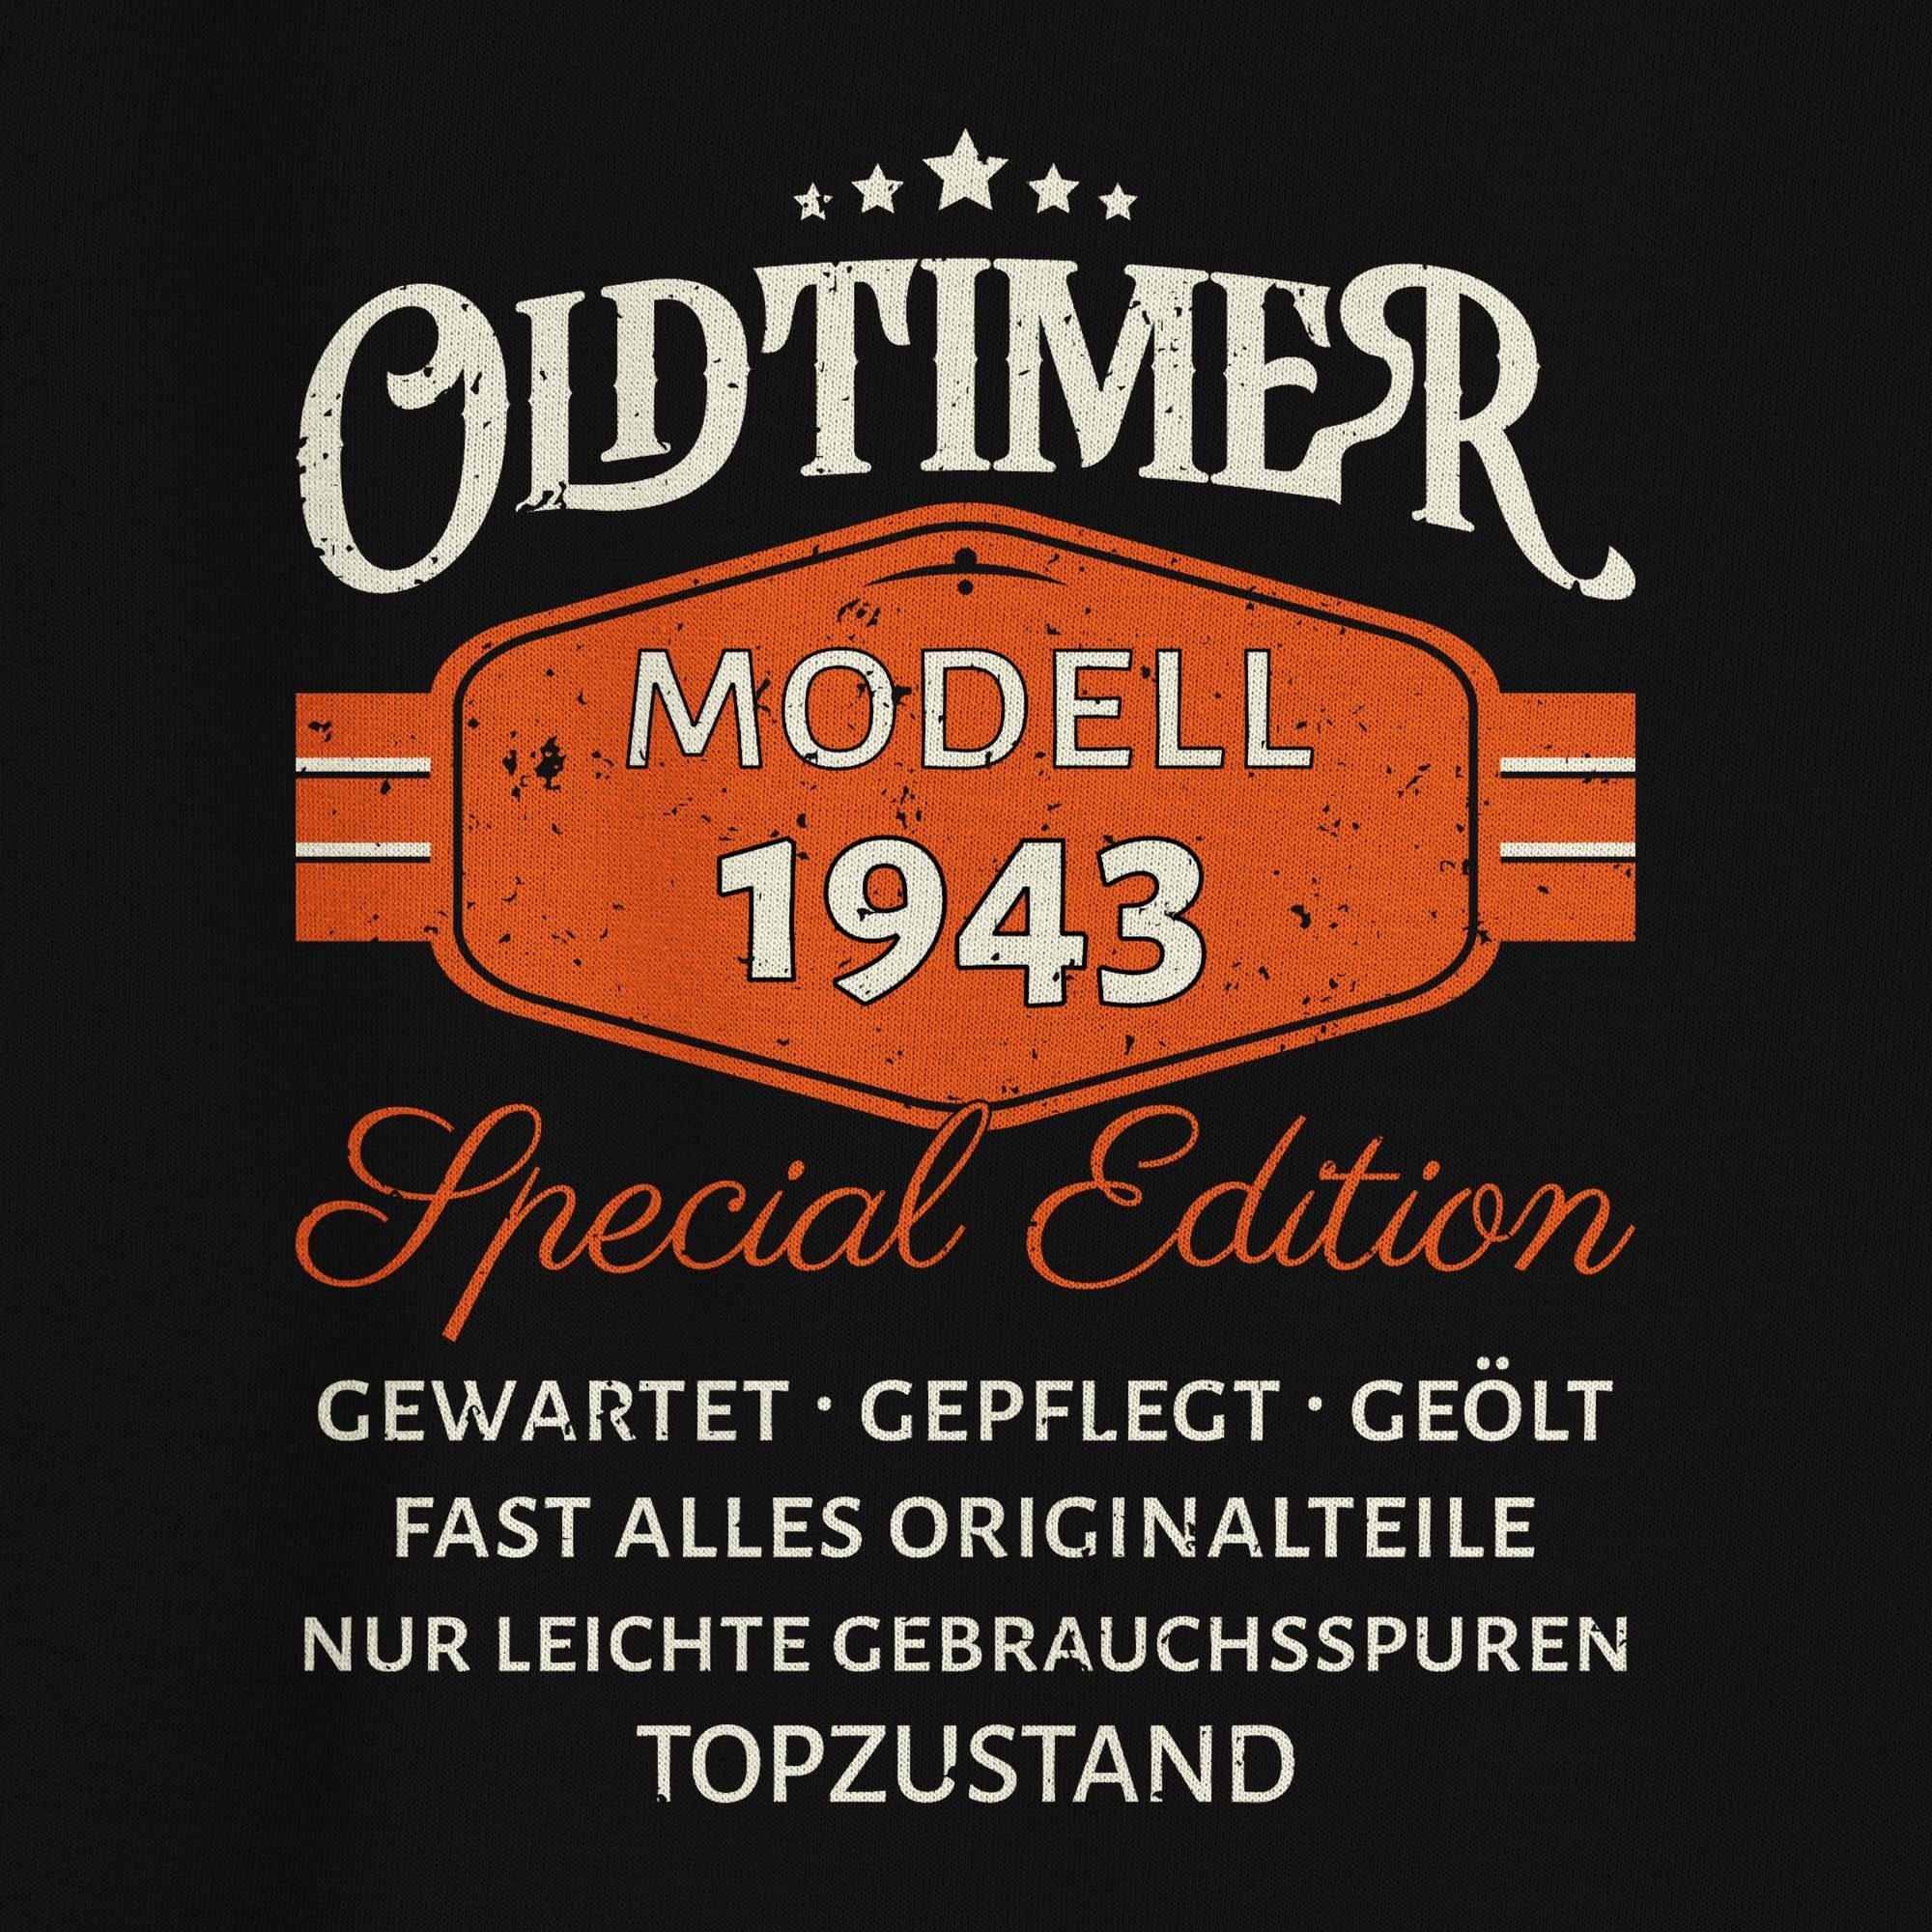 Shirtracer Sweatshirt Oldtimer 1943 Edition (1-tlg) Geburtstag Special 1 Schwarz 80. Modell Original